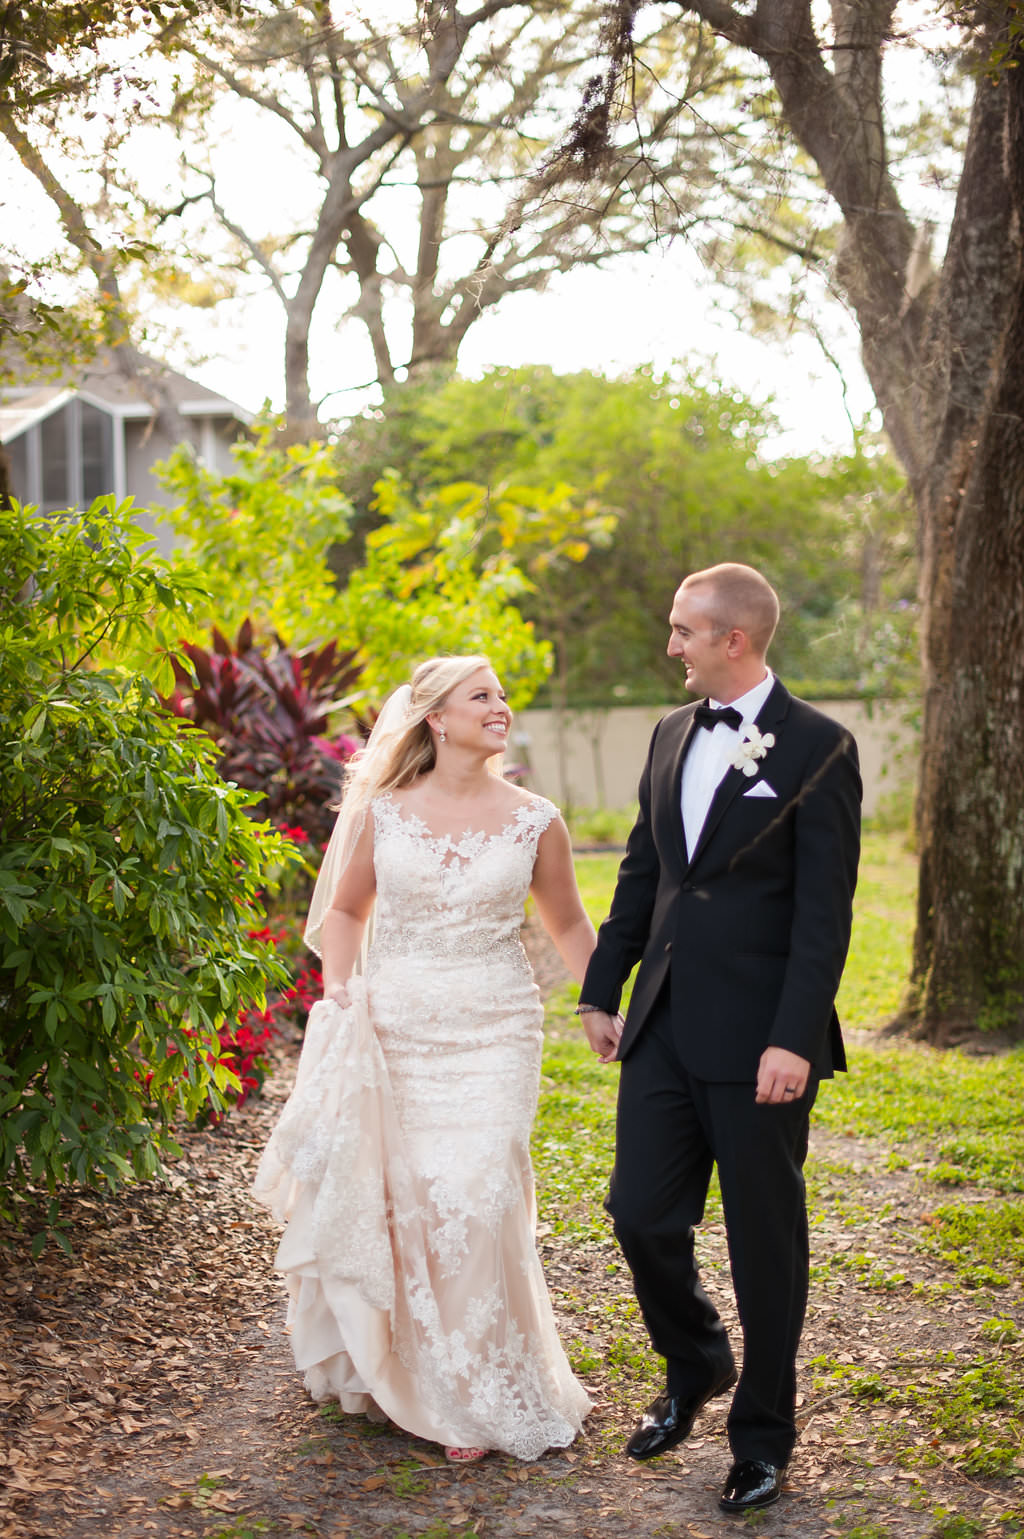 Outdoor Garden Bride and Groom Wedding Portrait wearing Allure Bridal Cream Lace Wedding Dress